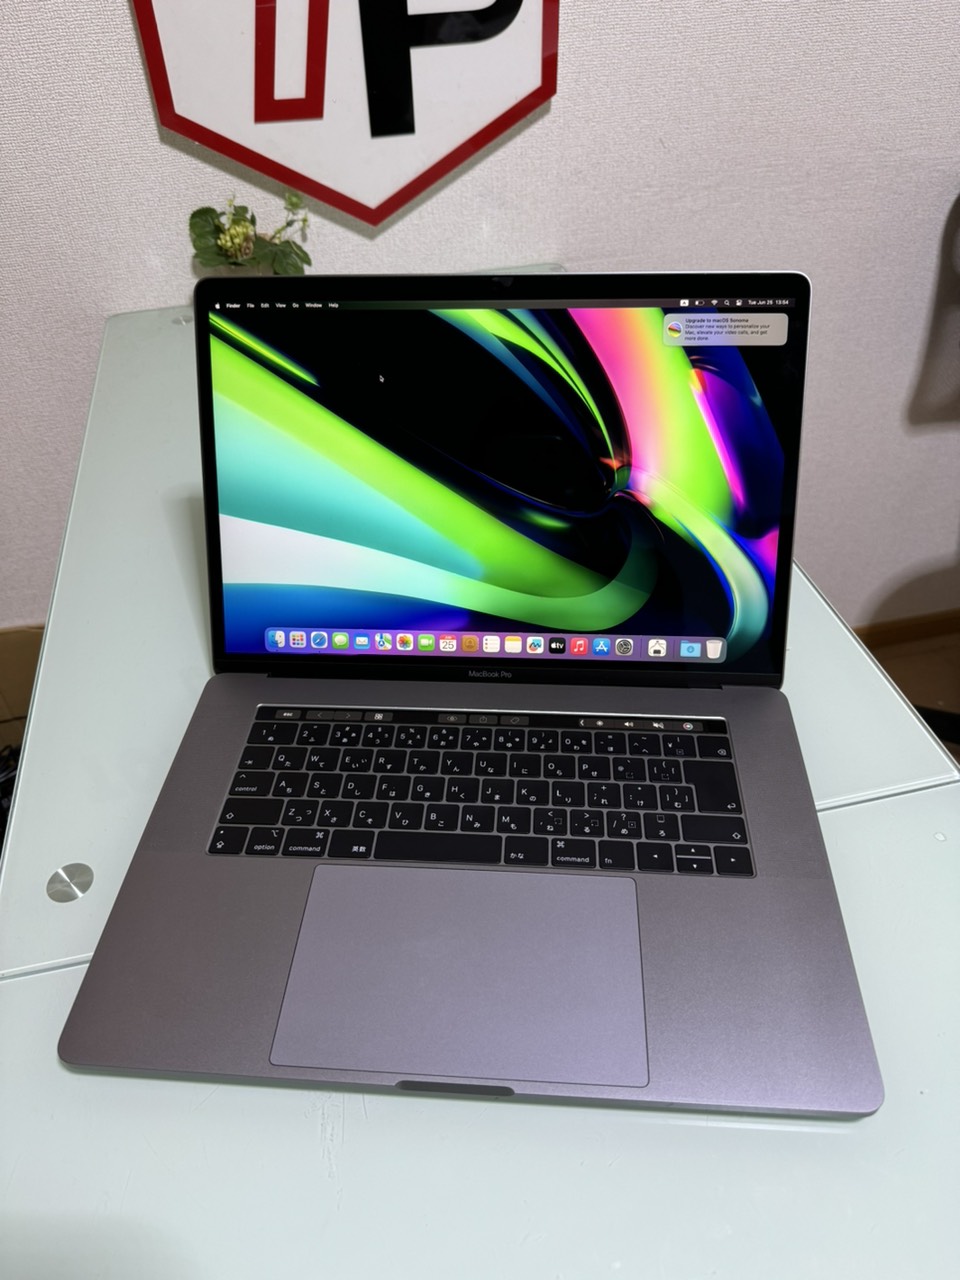 Macbook Pro 2018 Grey / Core i7 / RAM 16GB / SSD 256GB /AMD Radeon Pro 555X /15.4 inch 2k (2880x1800)